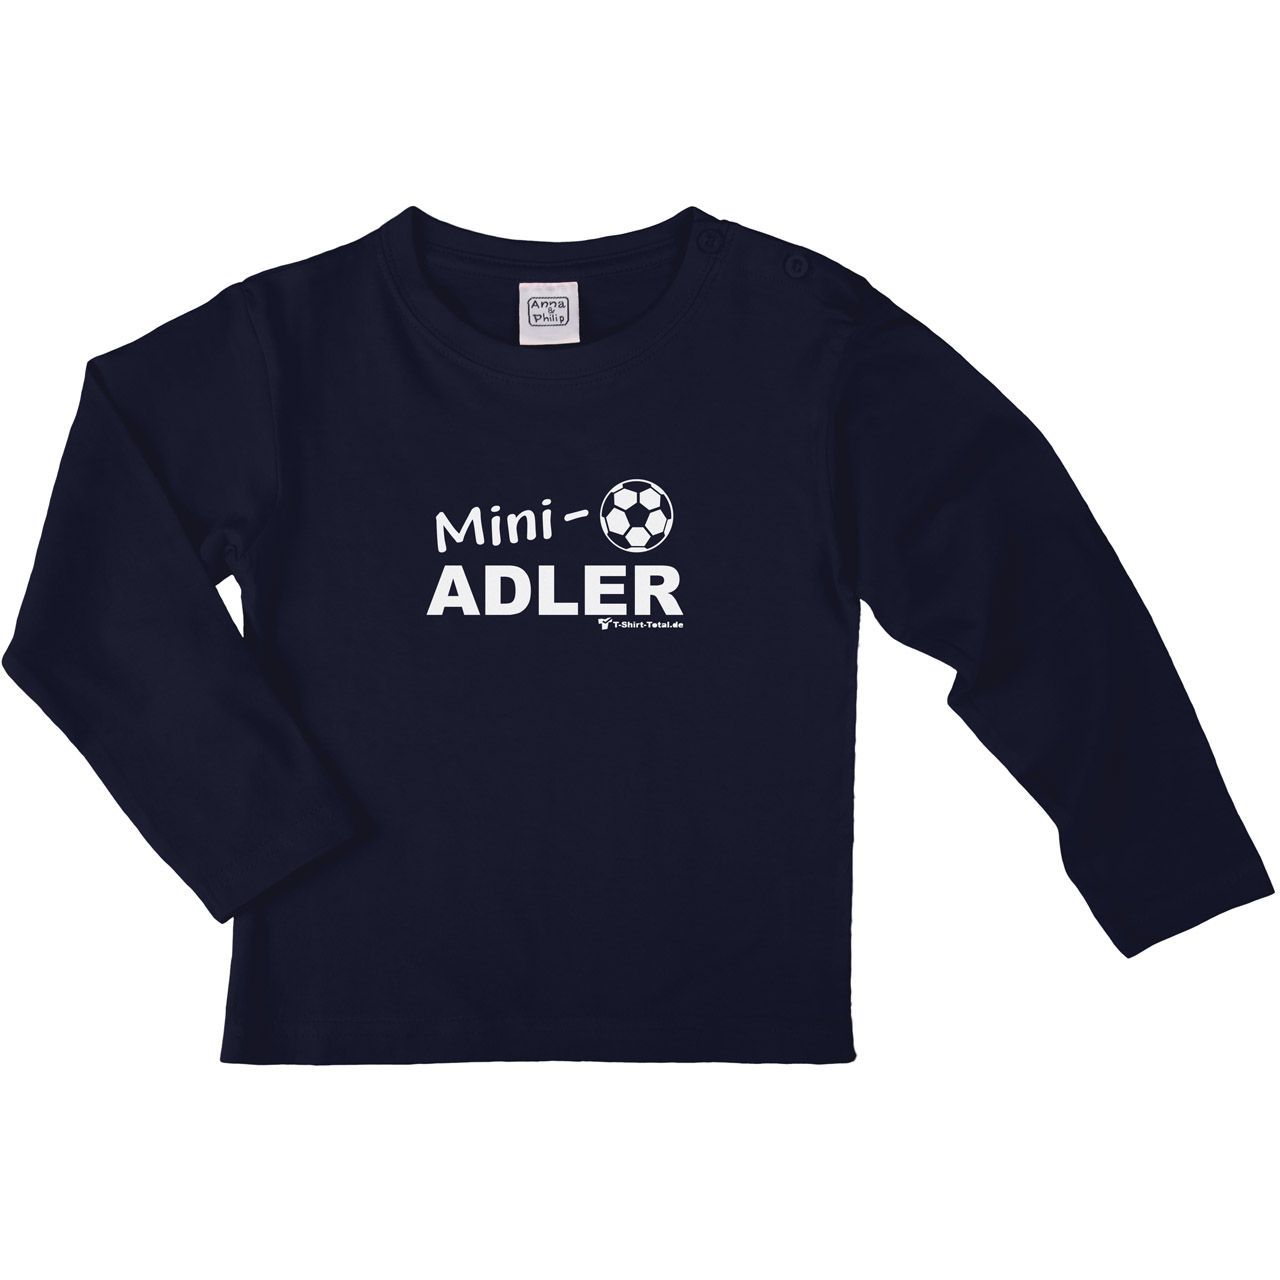 Mini Adler Kinder Langarm Shirt navy 122 / 128